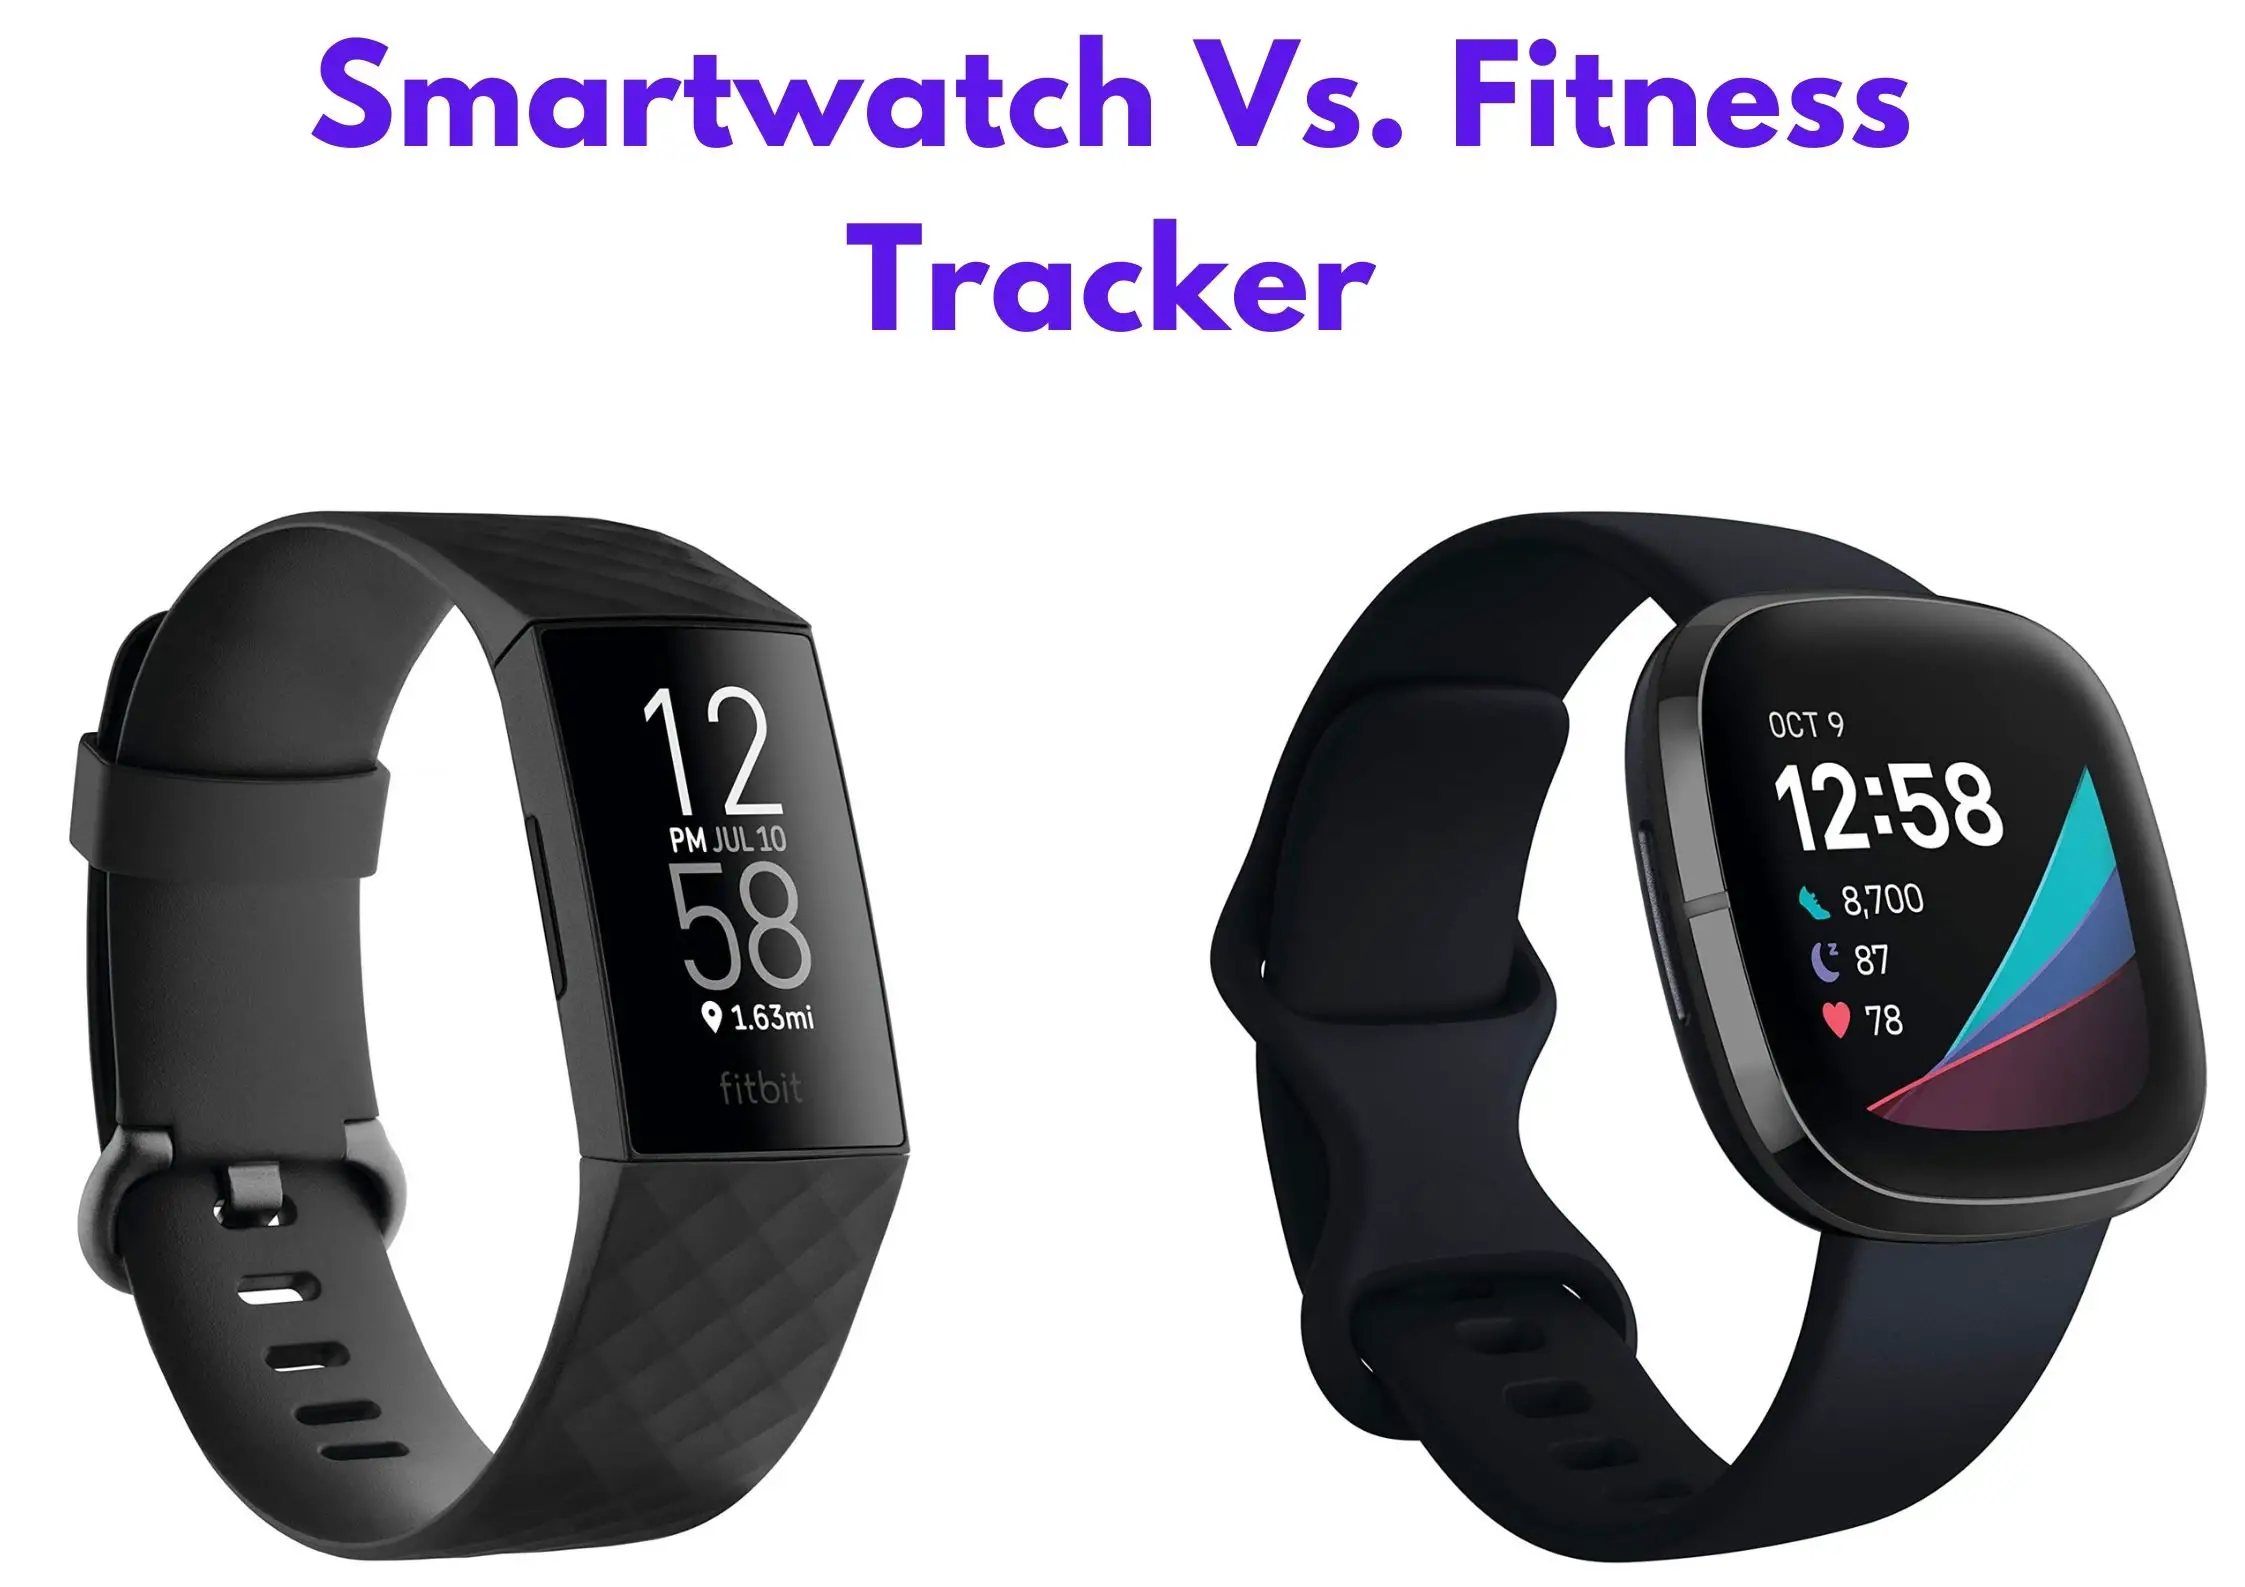 Smartwatch Vs. Fitness Tracker